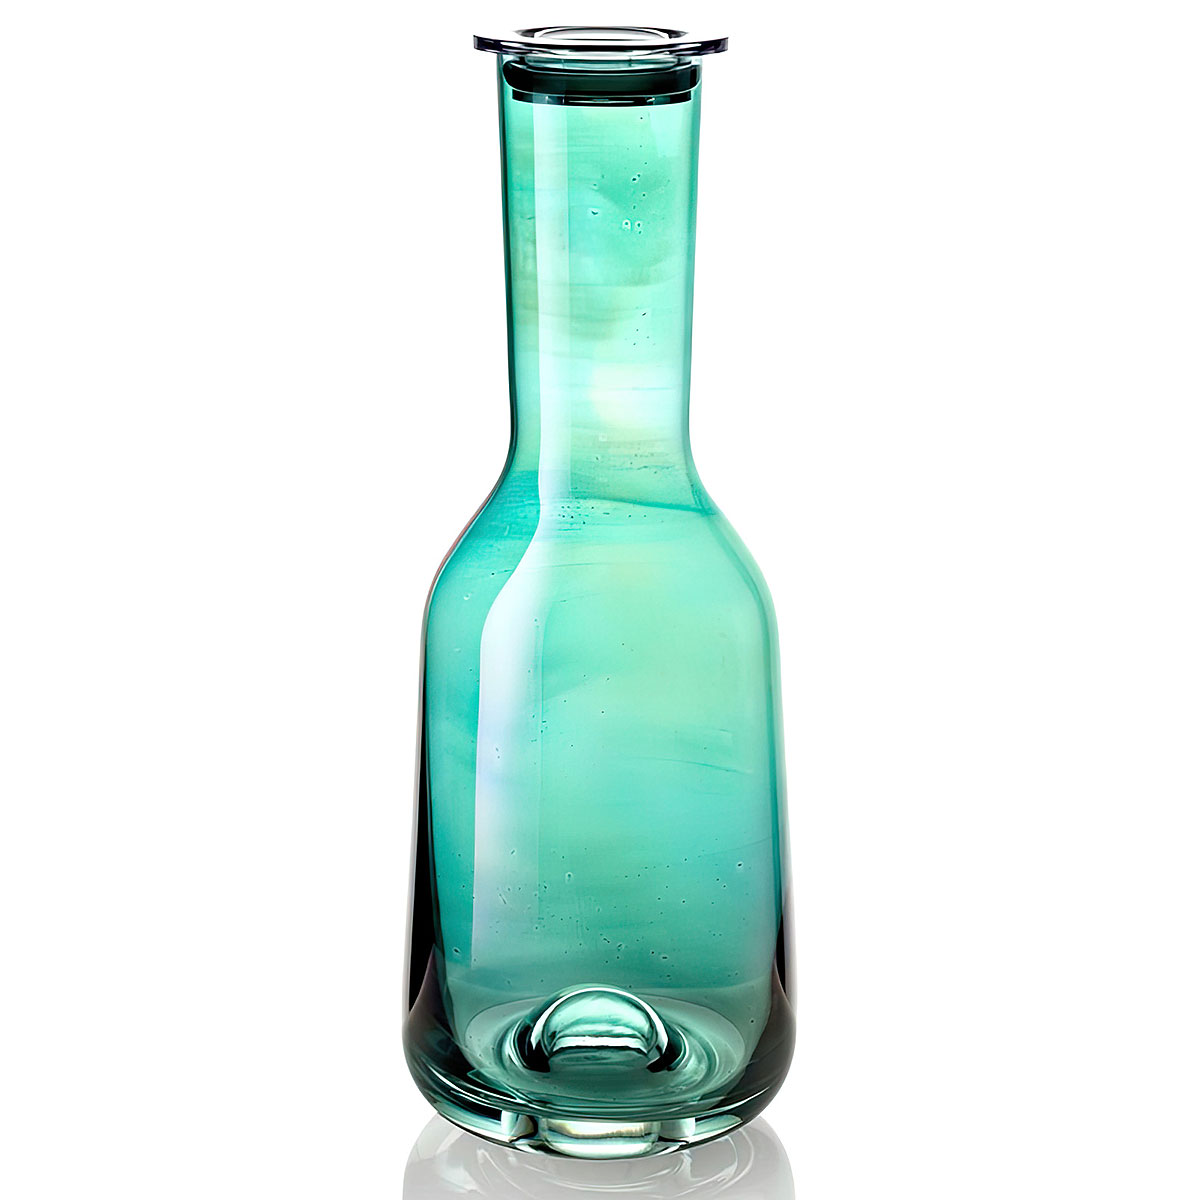 Бутылка с крышкой IVV Acquacheta, цвет зеленый